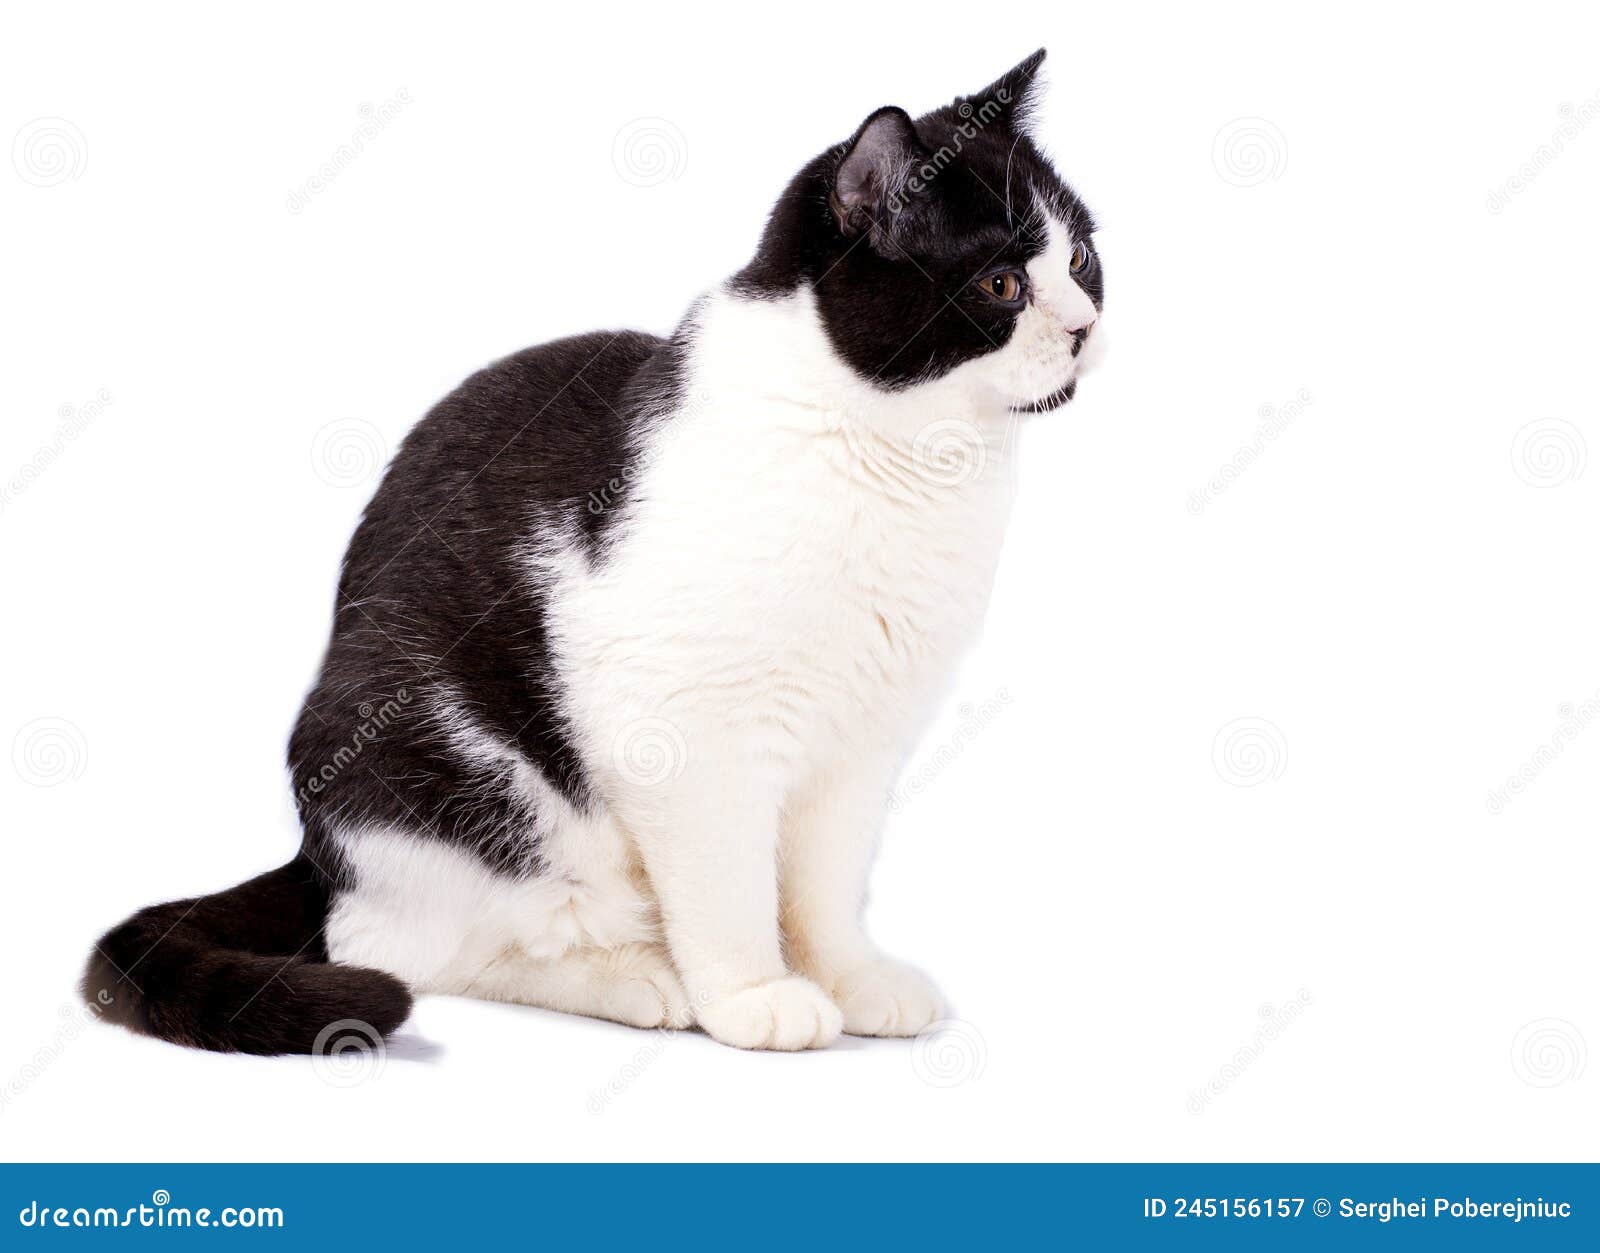 big scottish cat bicolor color on a white background,  image